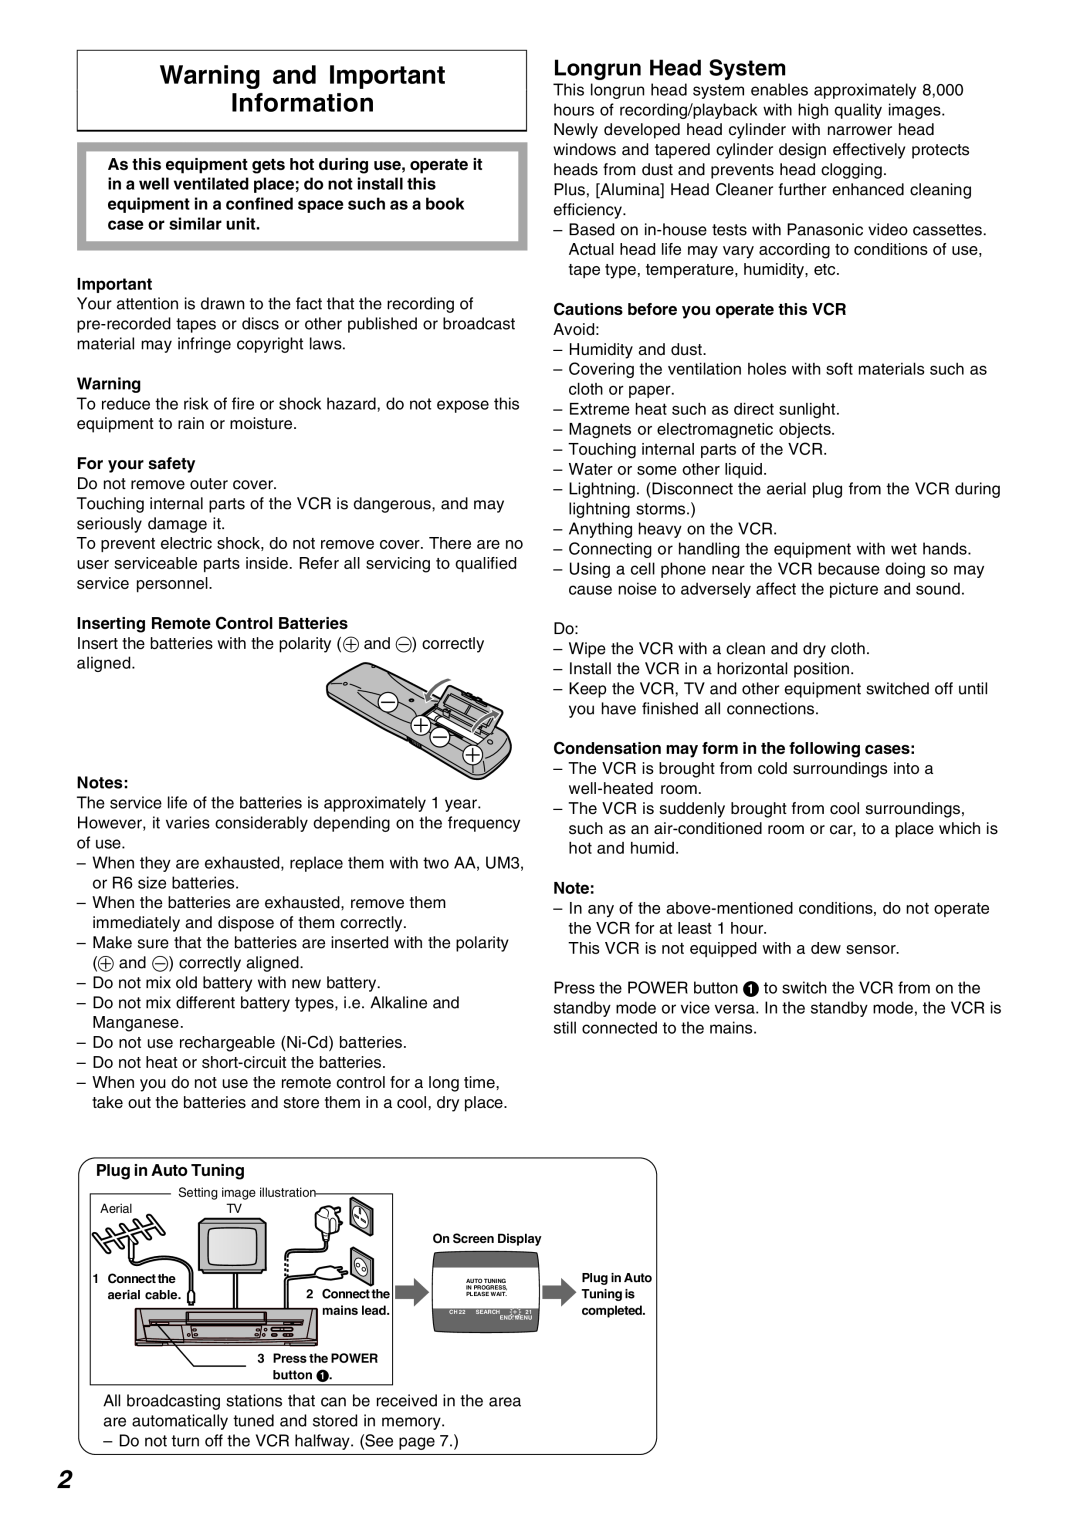 Panasonic NV-FJ625AM, NV-FJ620 specifications Warning and Important Information, Longrun Head System 